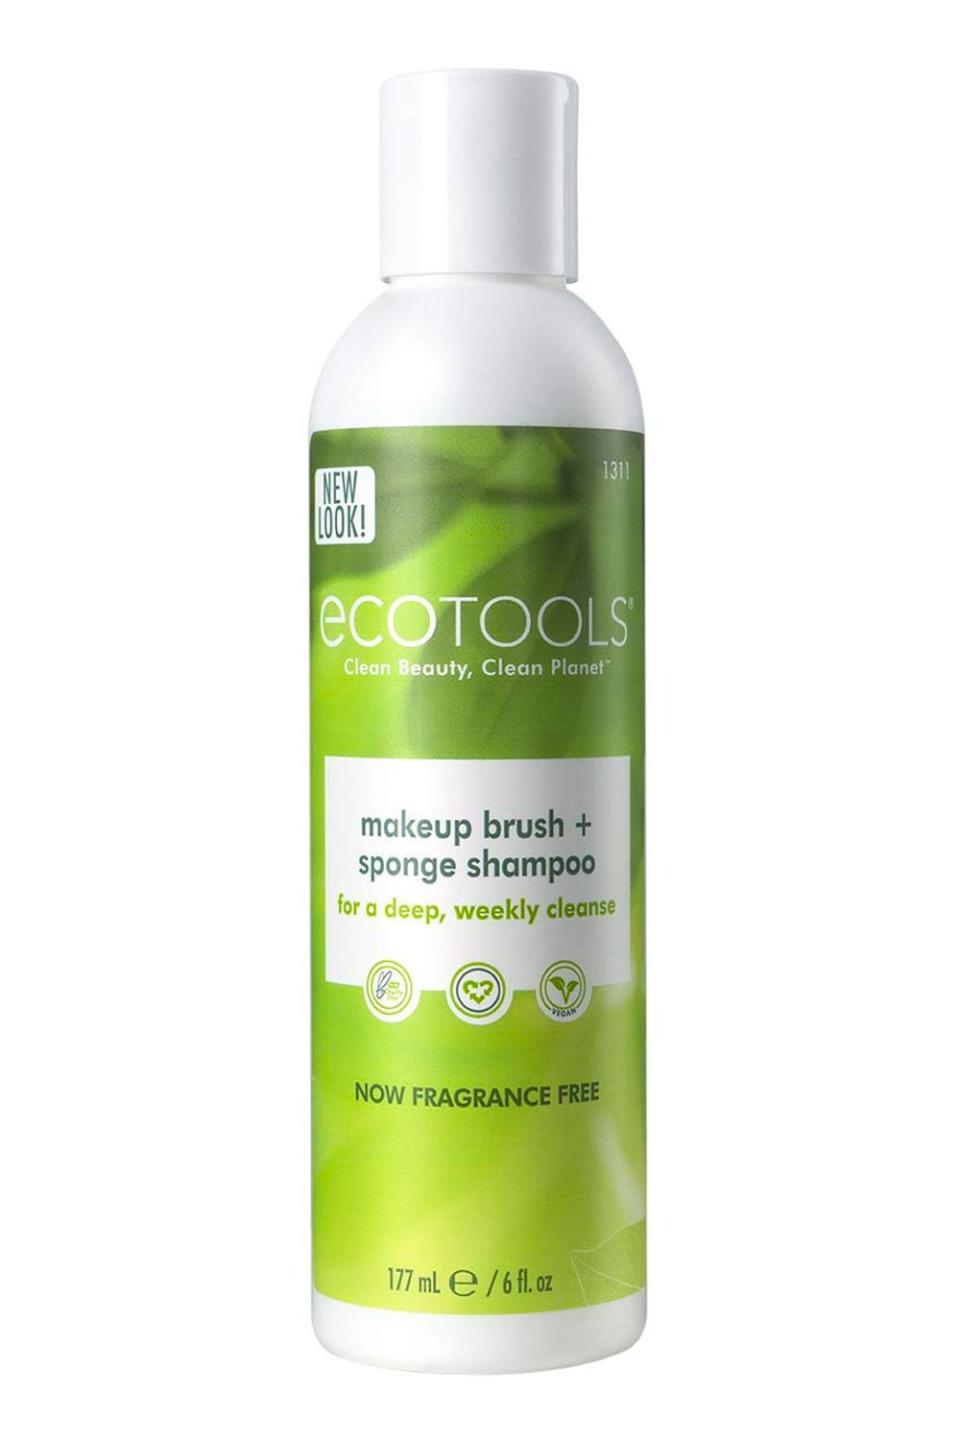 2) EcoTools Makeup Brush Cleansing Shampoo